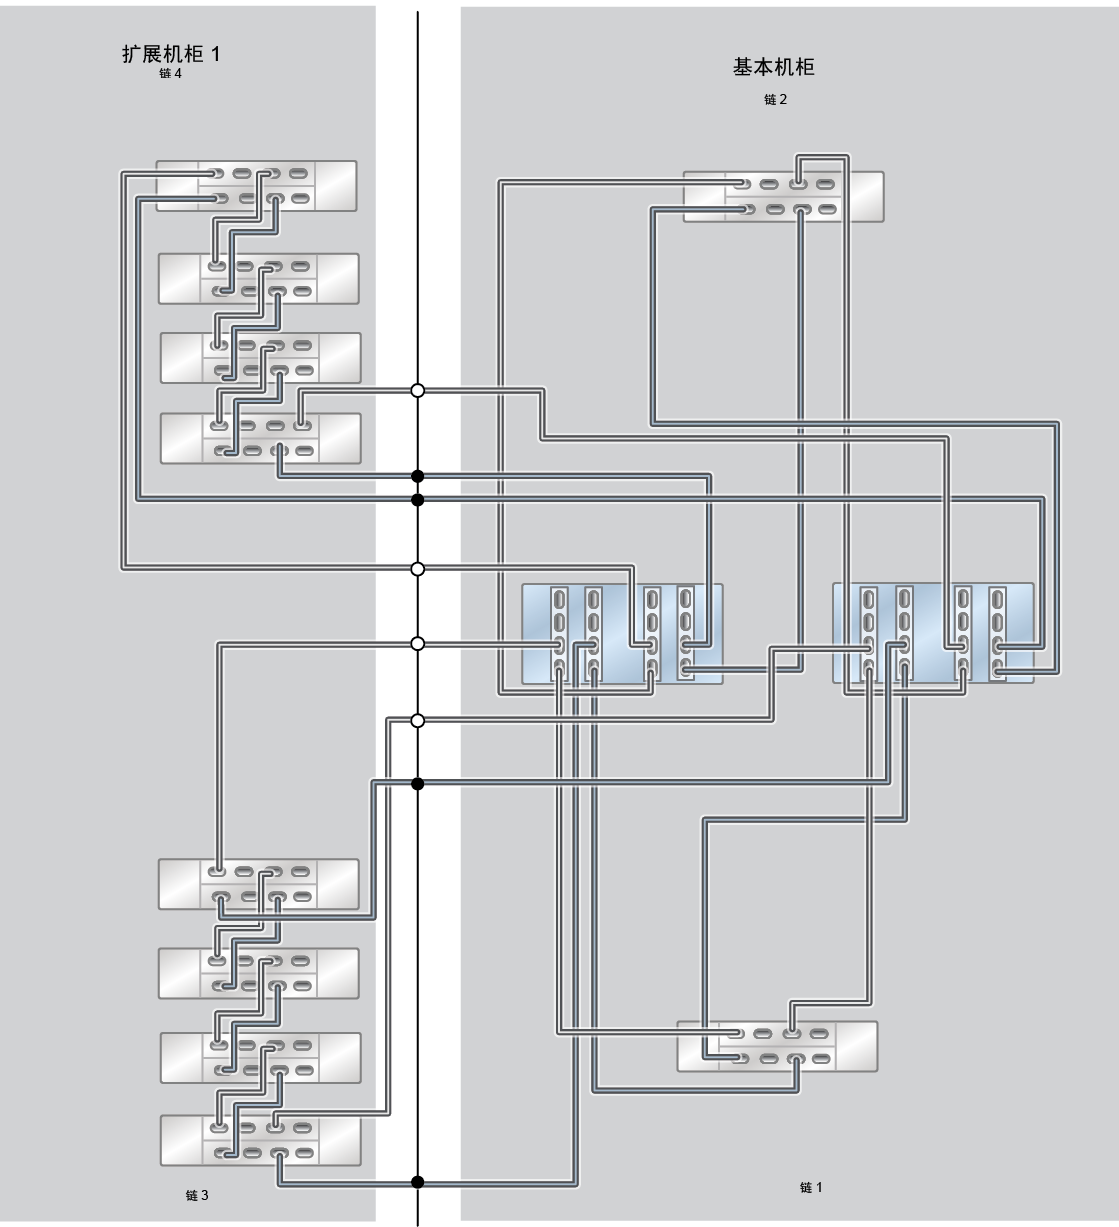 image:此图显示了具有一个扩展机柜（八个 DE3-24C 磁盘机框）的 ZS5-4 Racked System 全闪存。